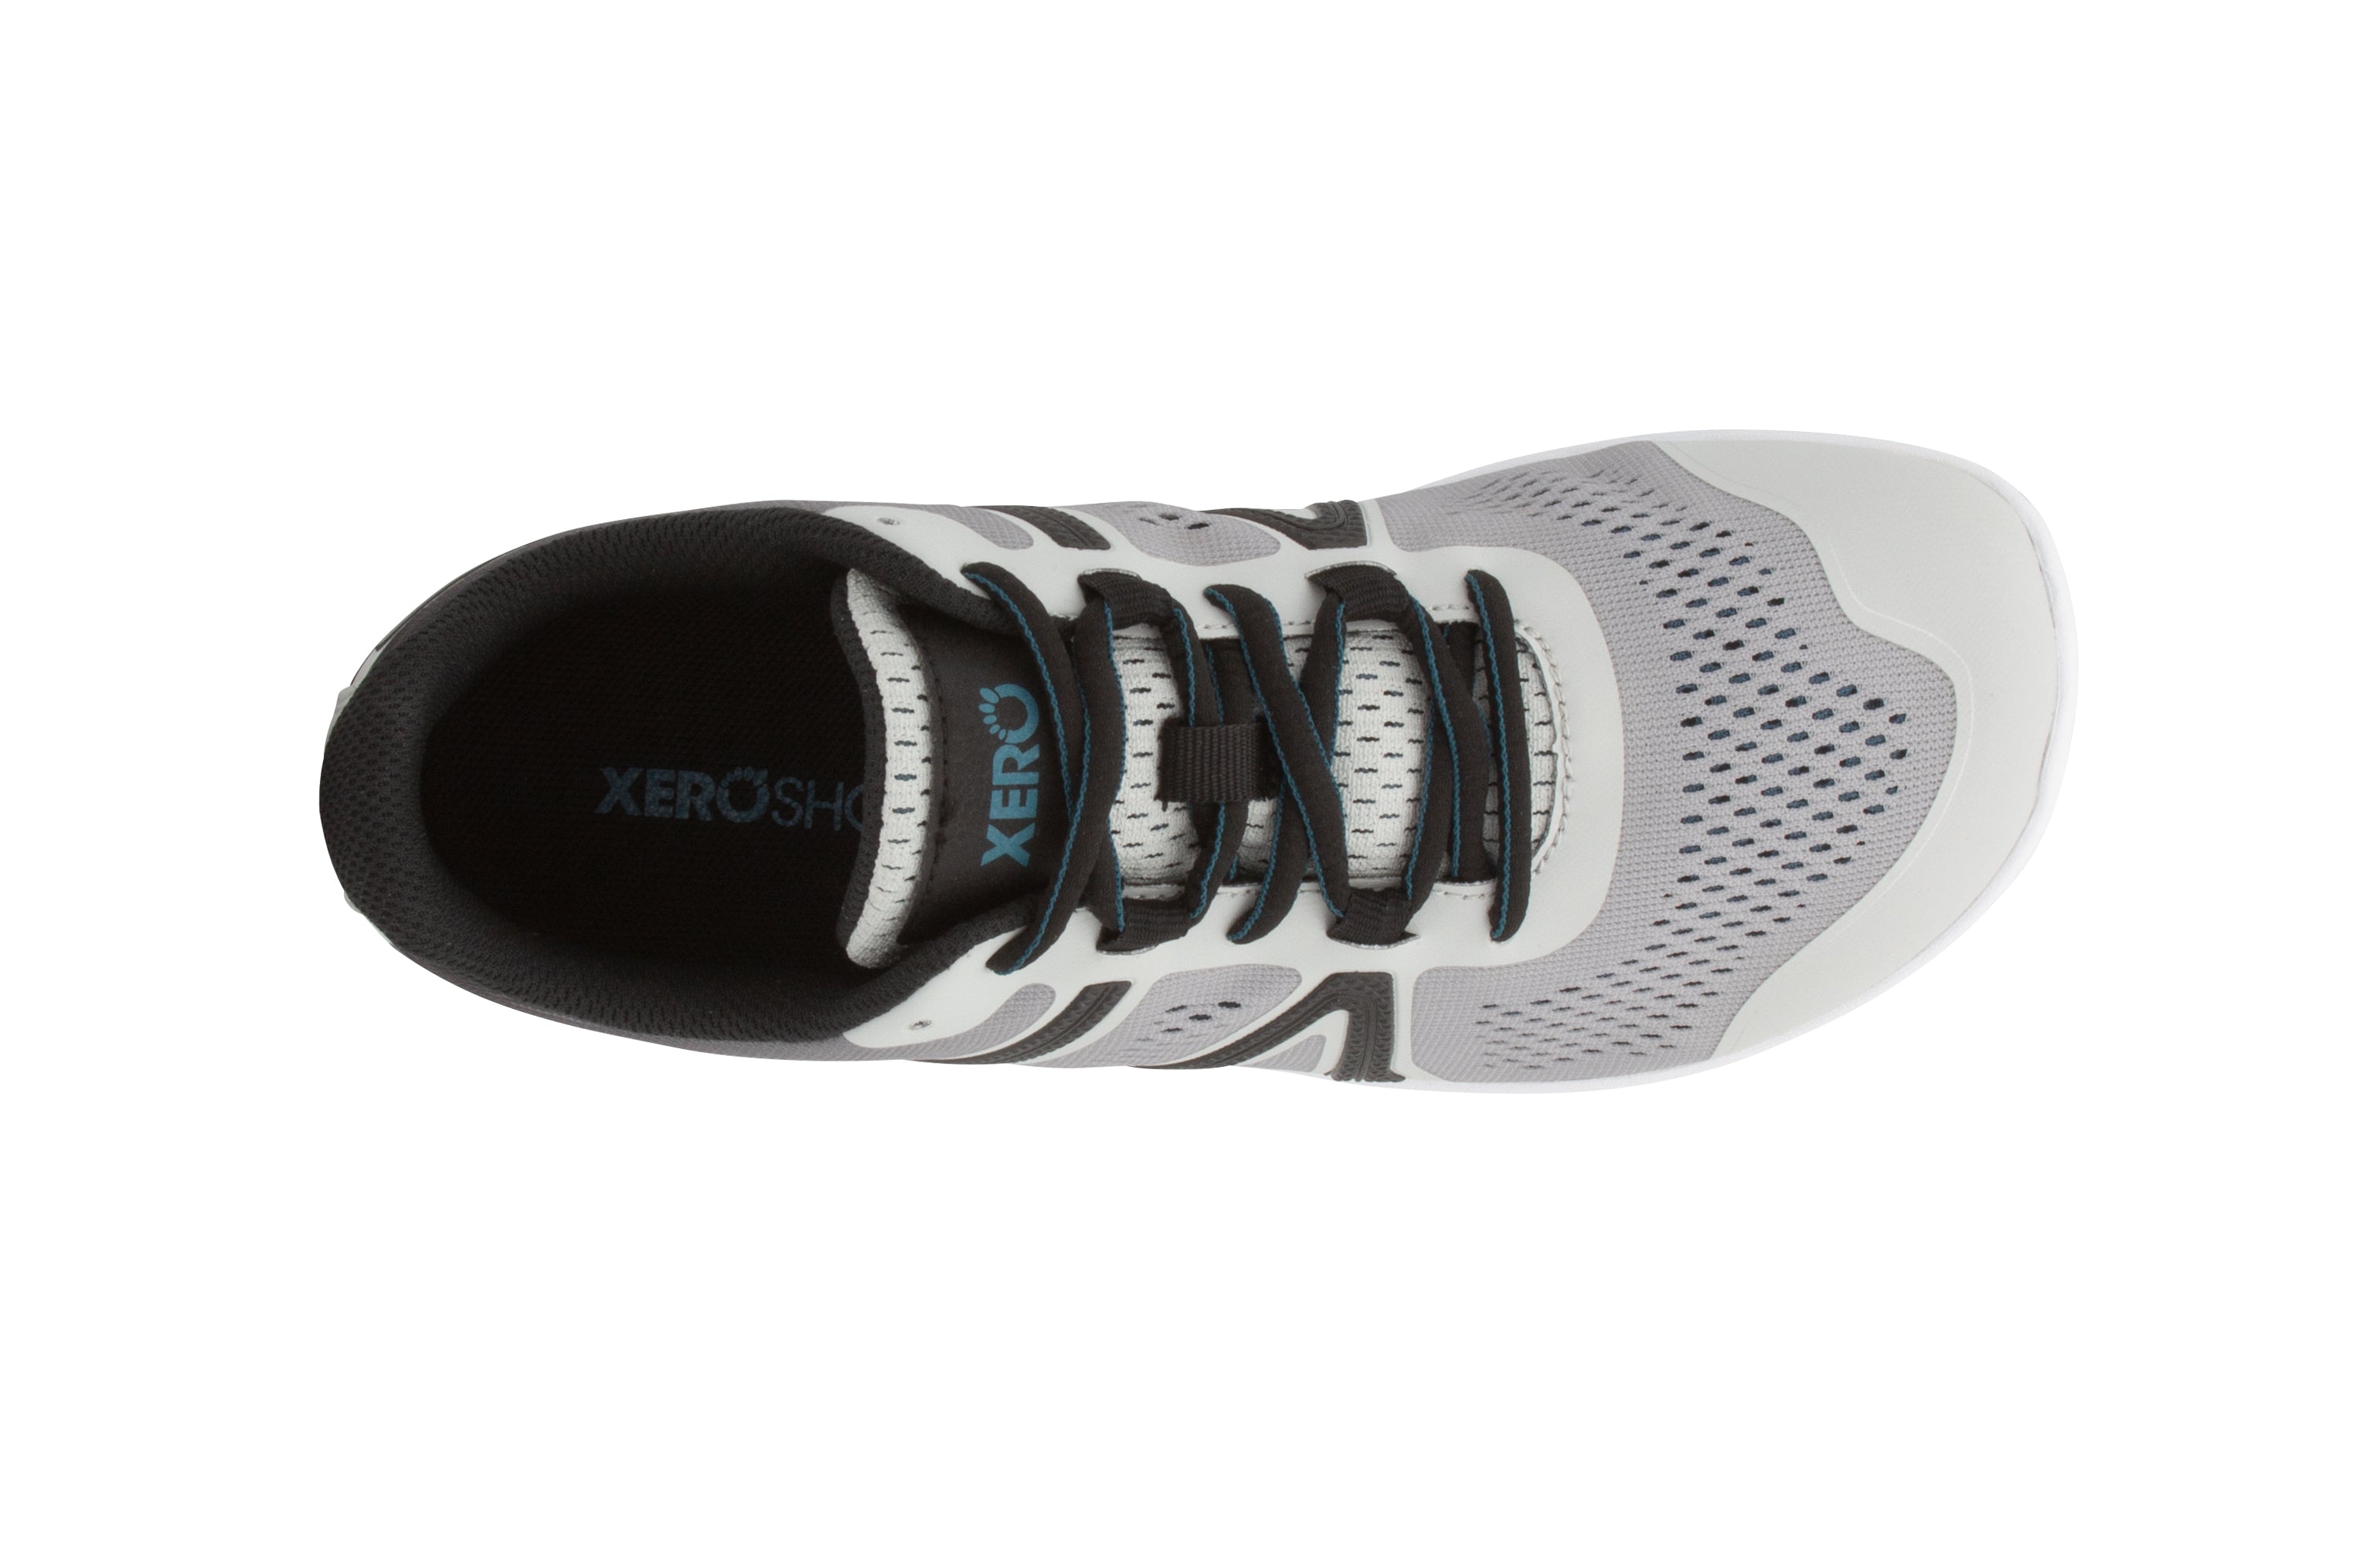 Xero Shoes HFS Womens barfods træningssko/løbesko til kvinder i farven aurora gray, top